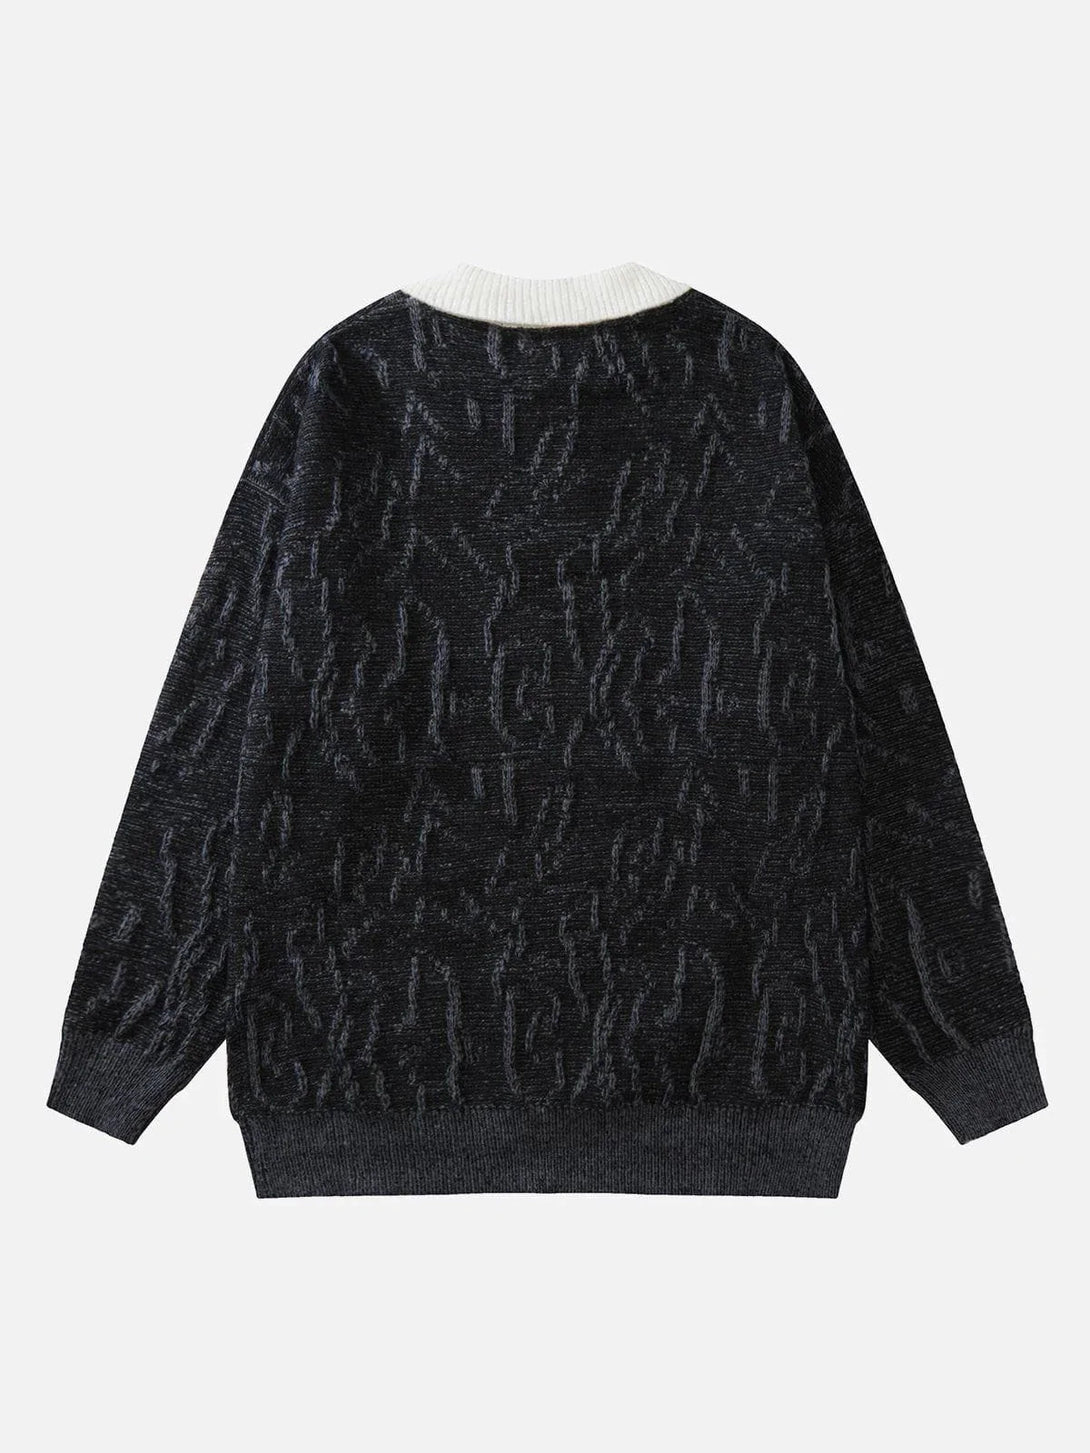 Majesda® - Vintage Contrast Knit Polo Sweater outfit ideas streetwear fashion